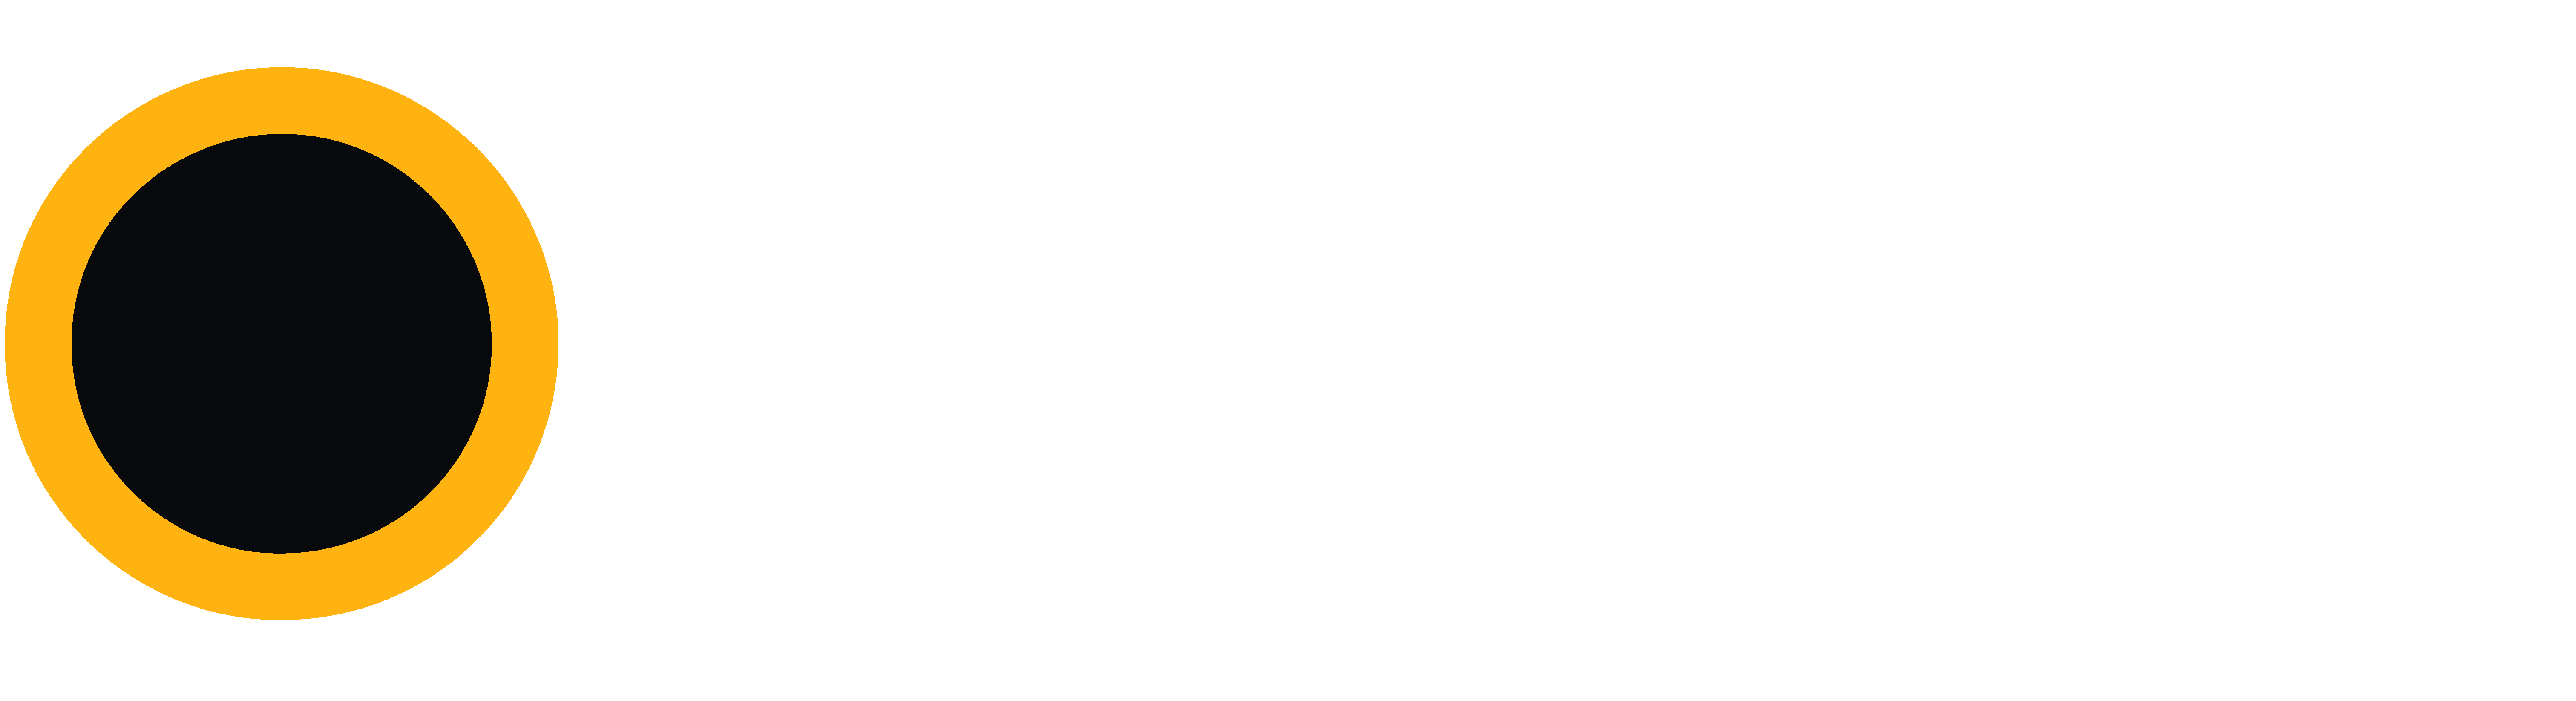 Robotic Imaging circle logo.